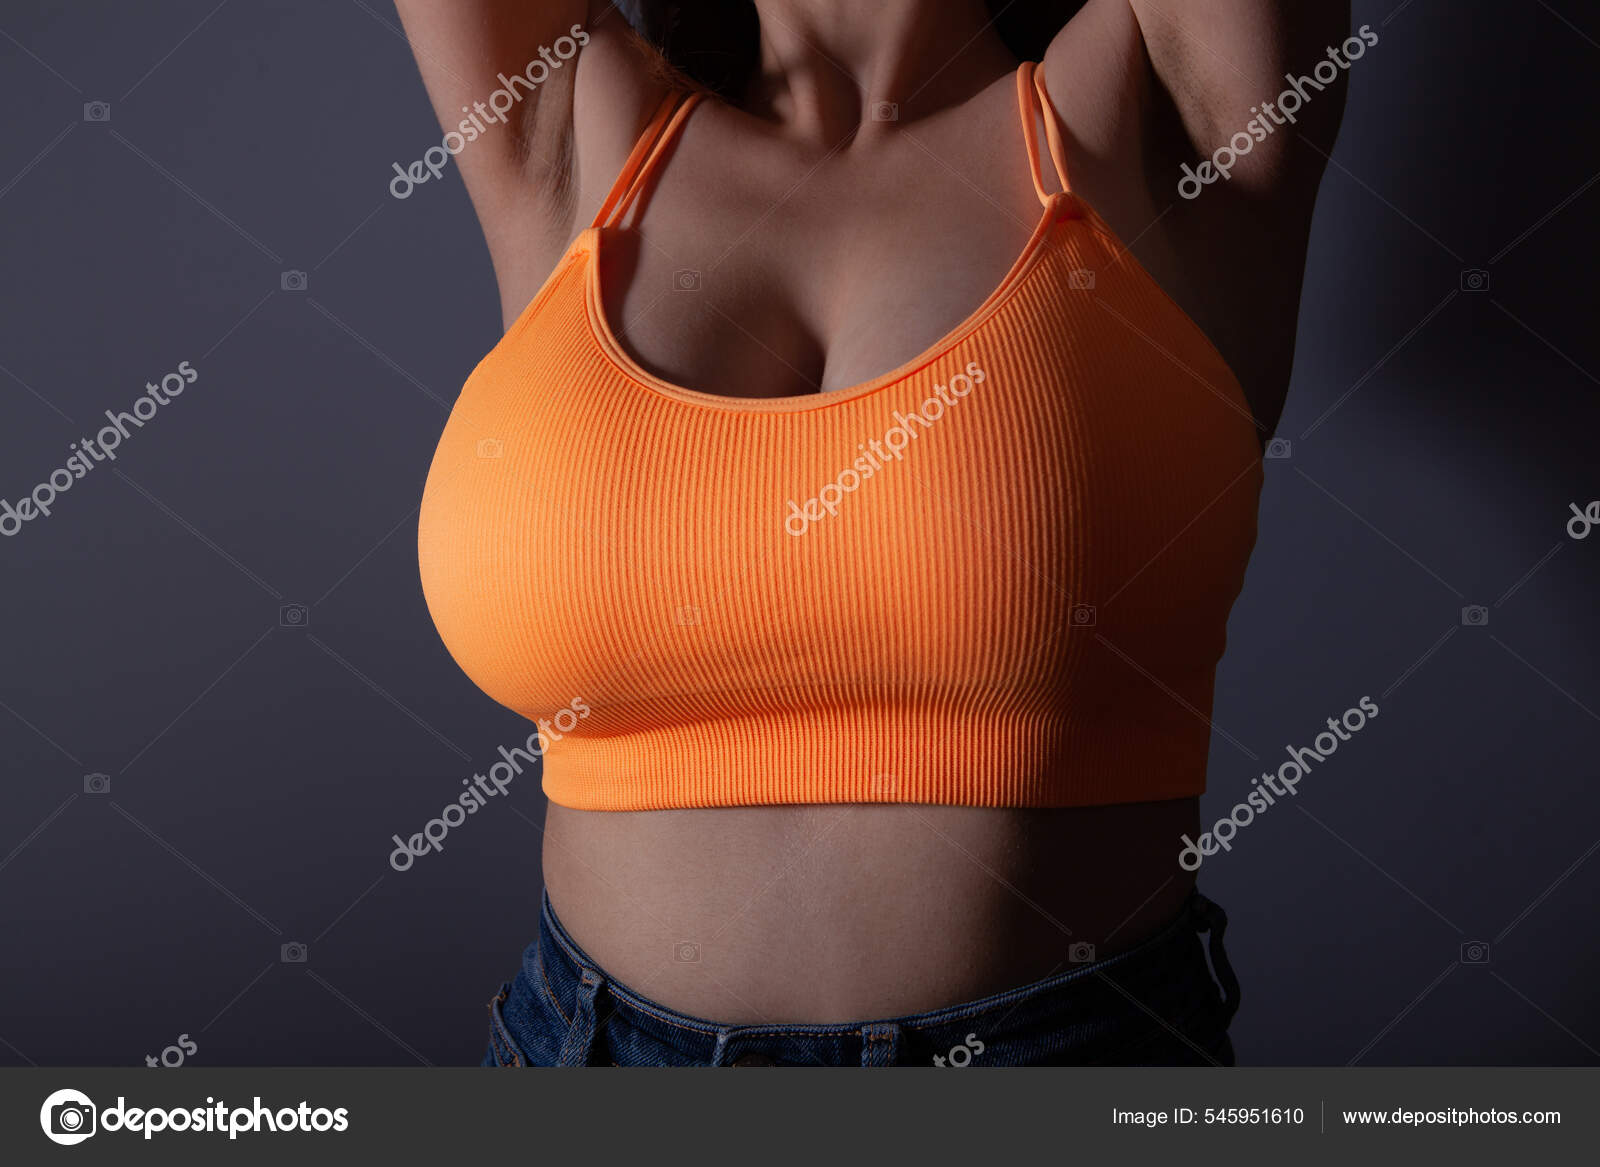 https://st.depositphotos.com/7485446/54595/i/1600/depositphotos_545951610-stock-photo-sexy-woman-huge-breasts-tank.jpg